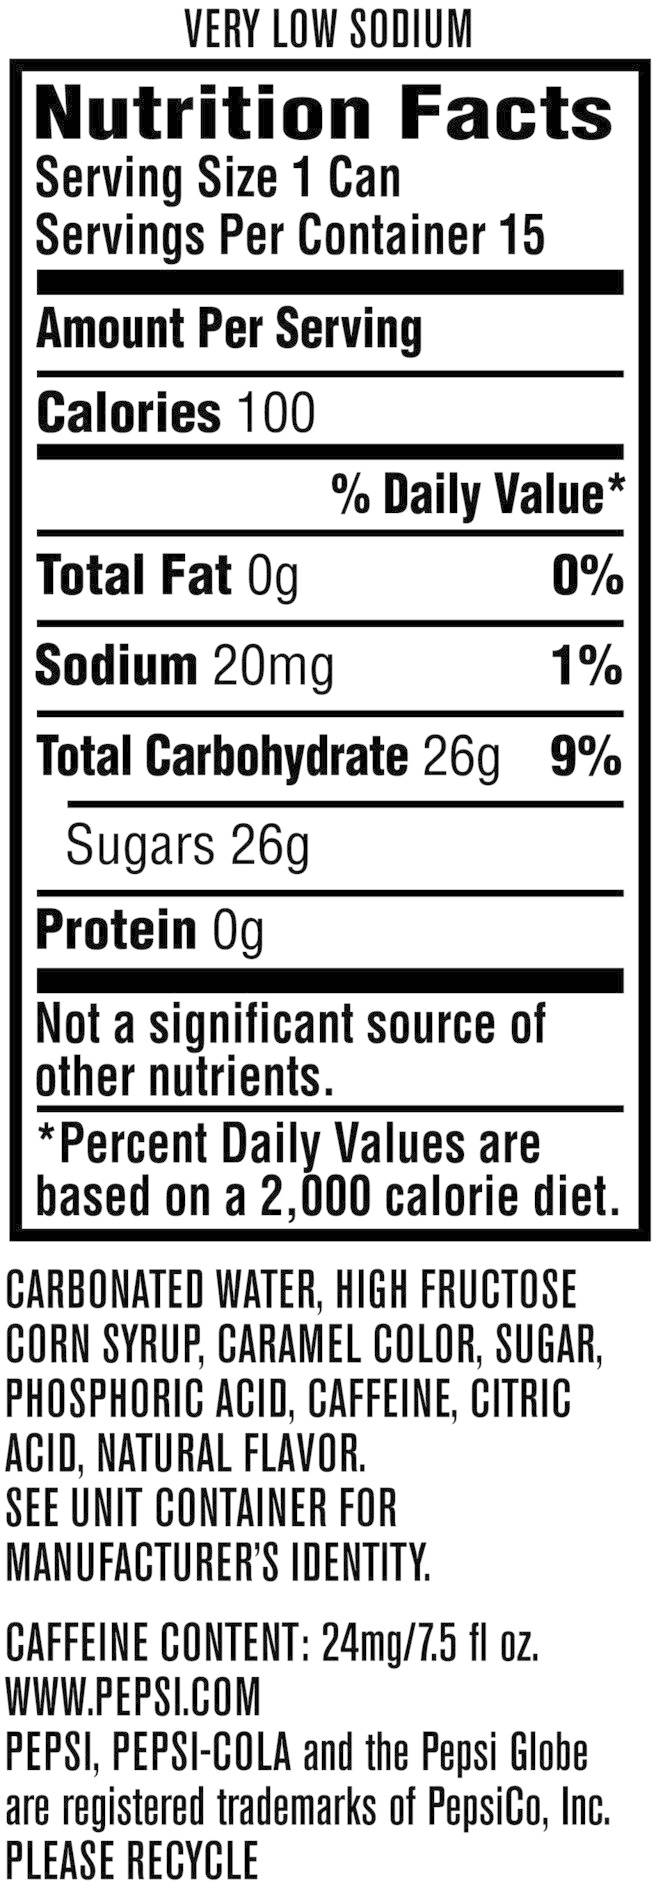 Image describing nutrition information for product Pepsi NFL Shield